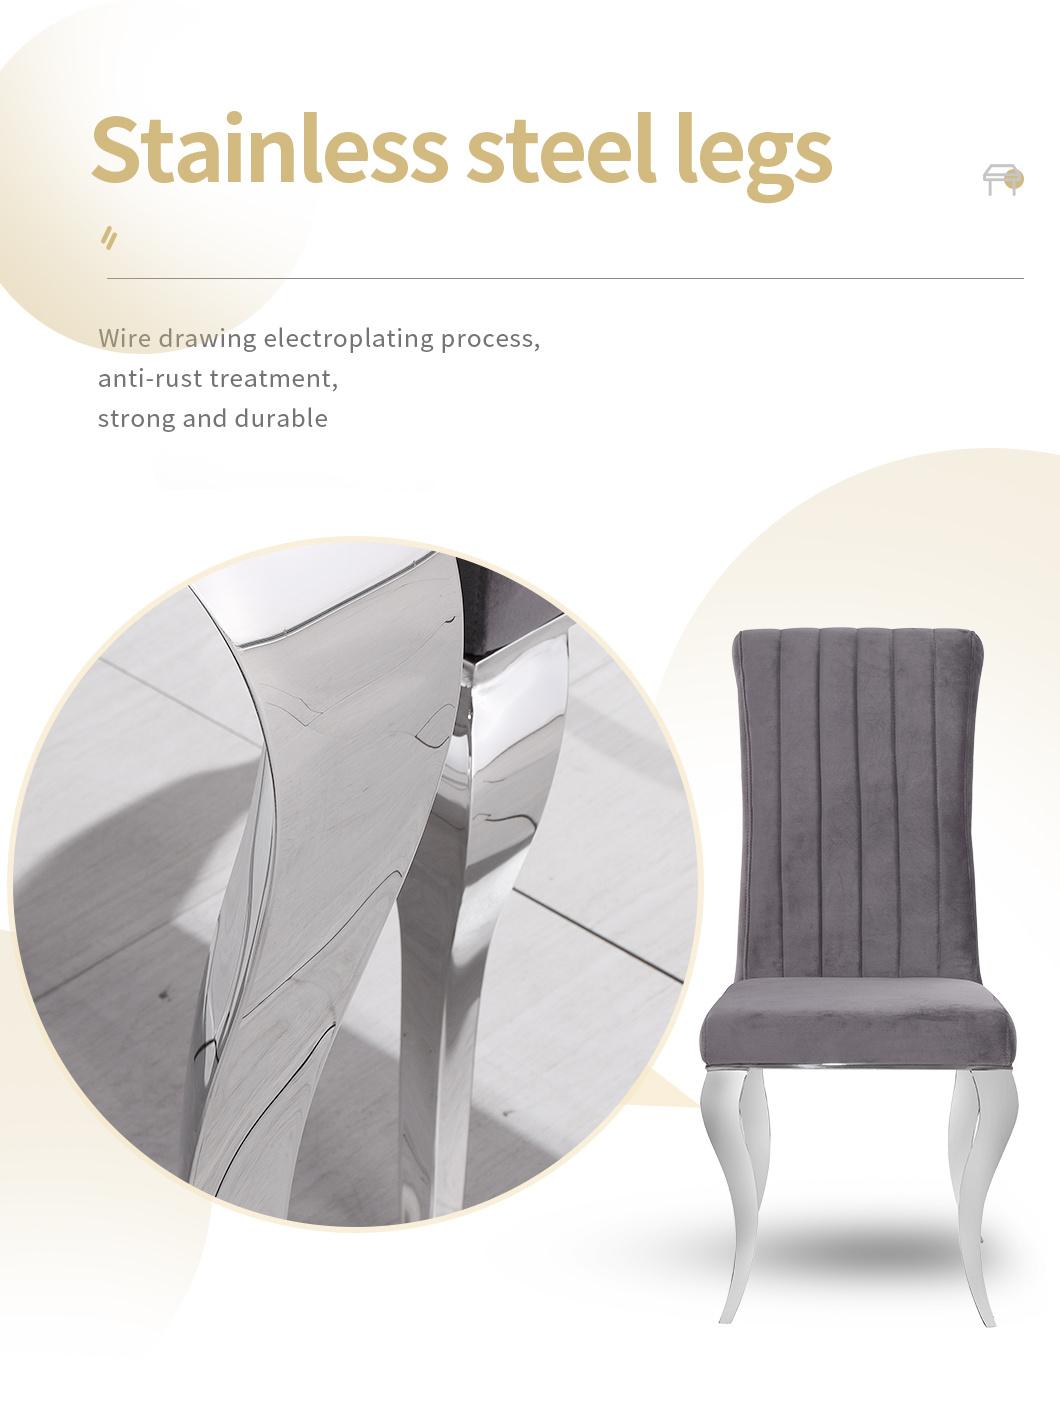 Resturent Diron Carton Box 45*55*105cm Wedding Chair China Wholesale DC183